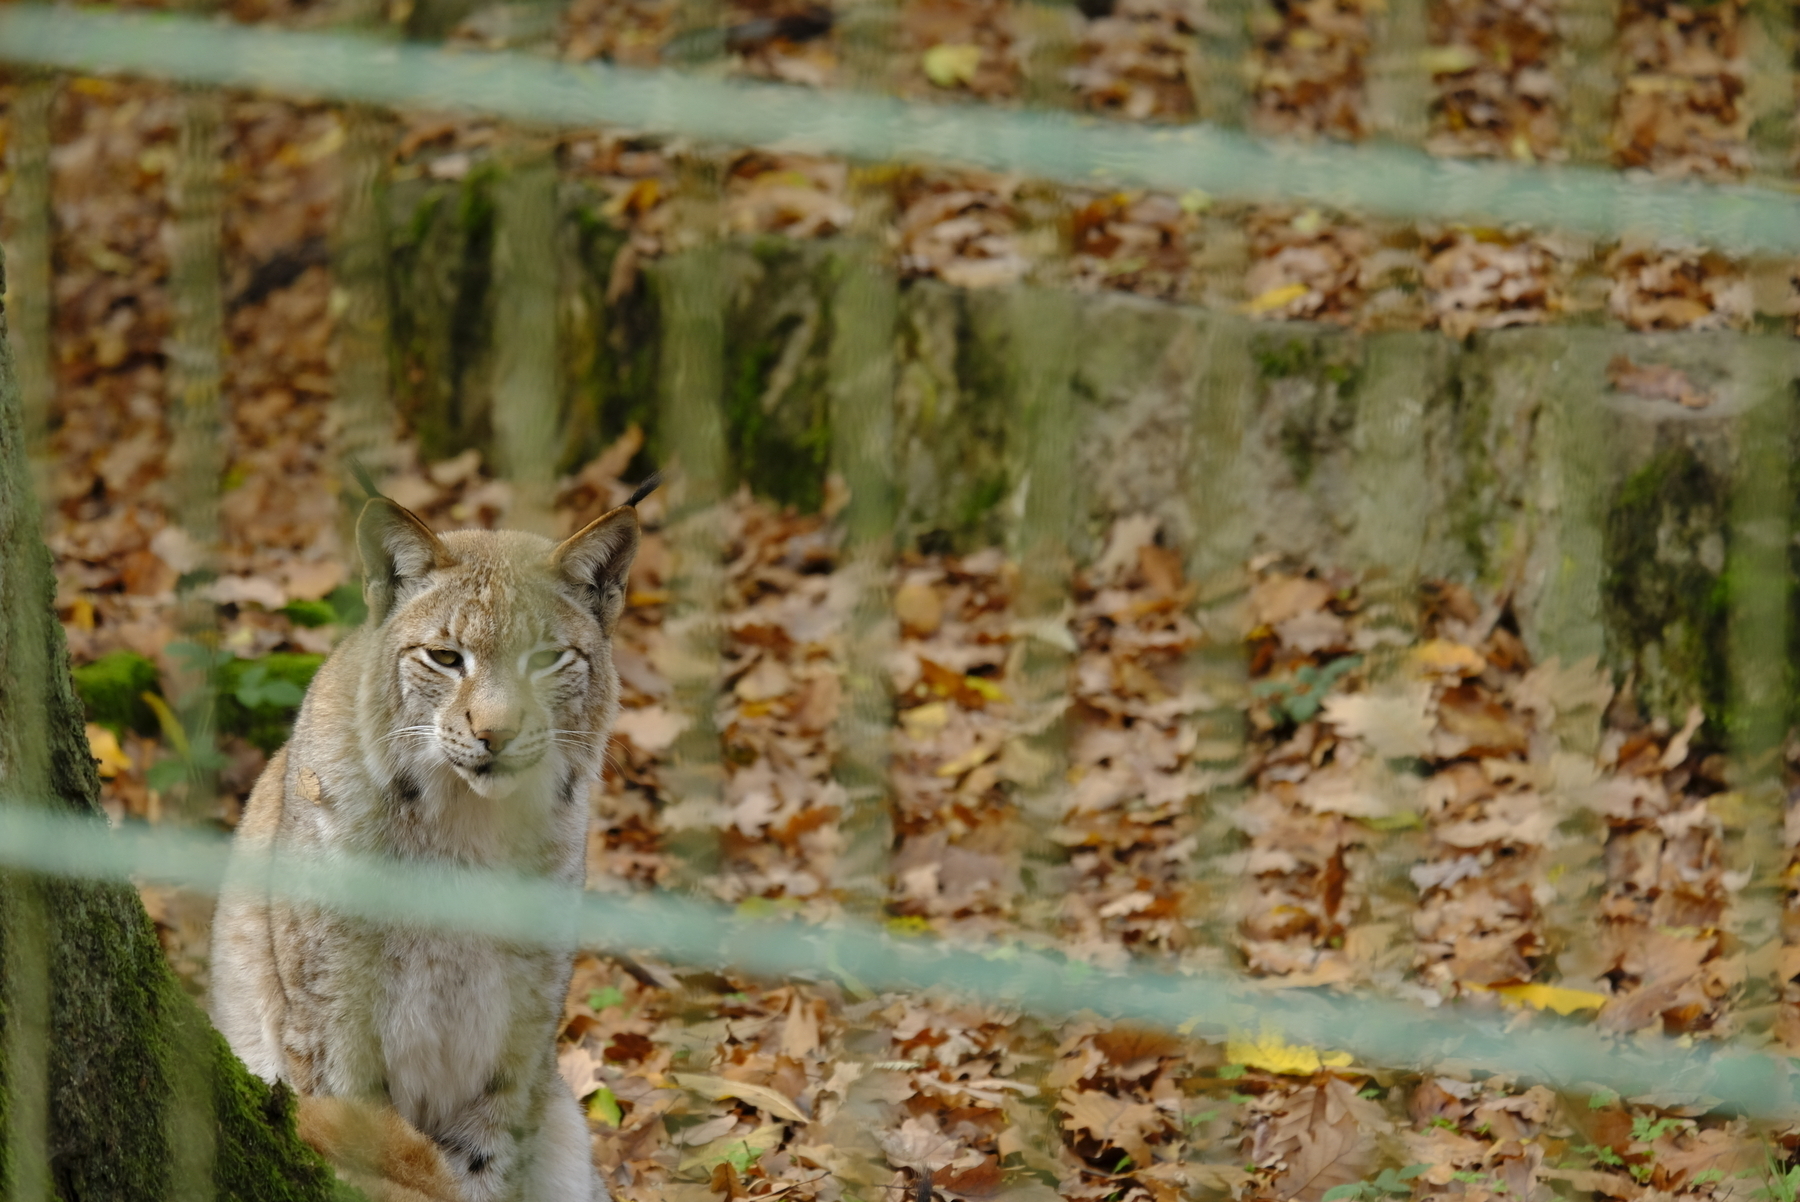 Lynx behind bars